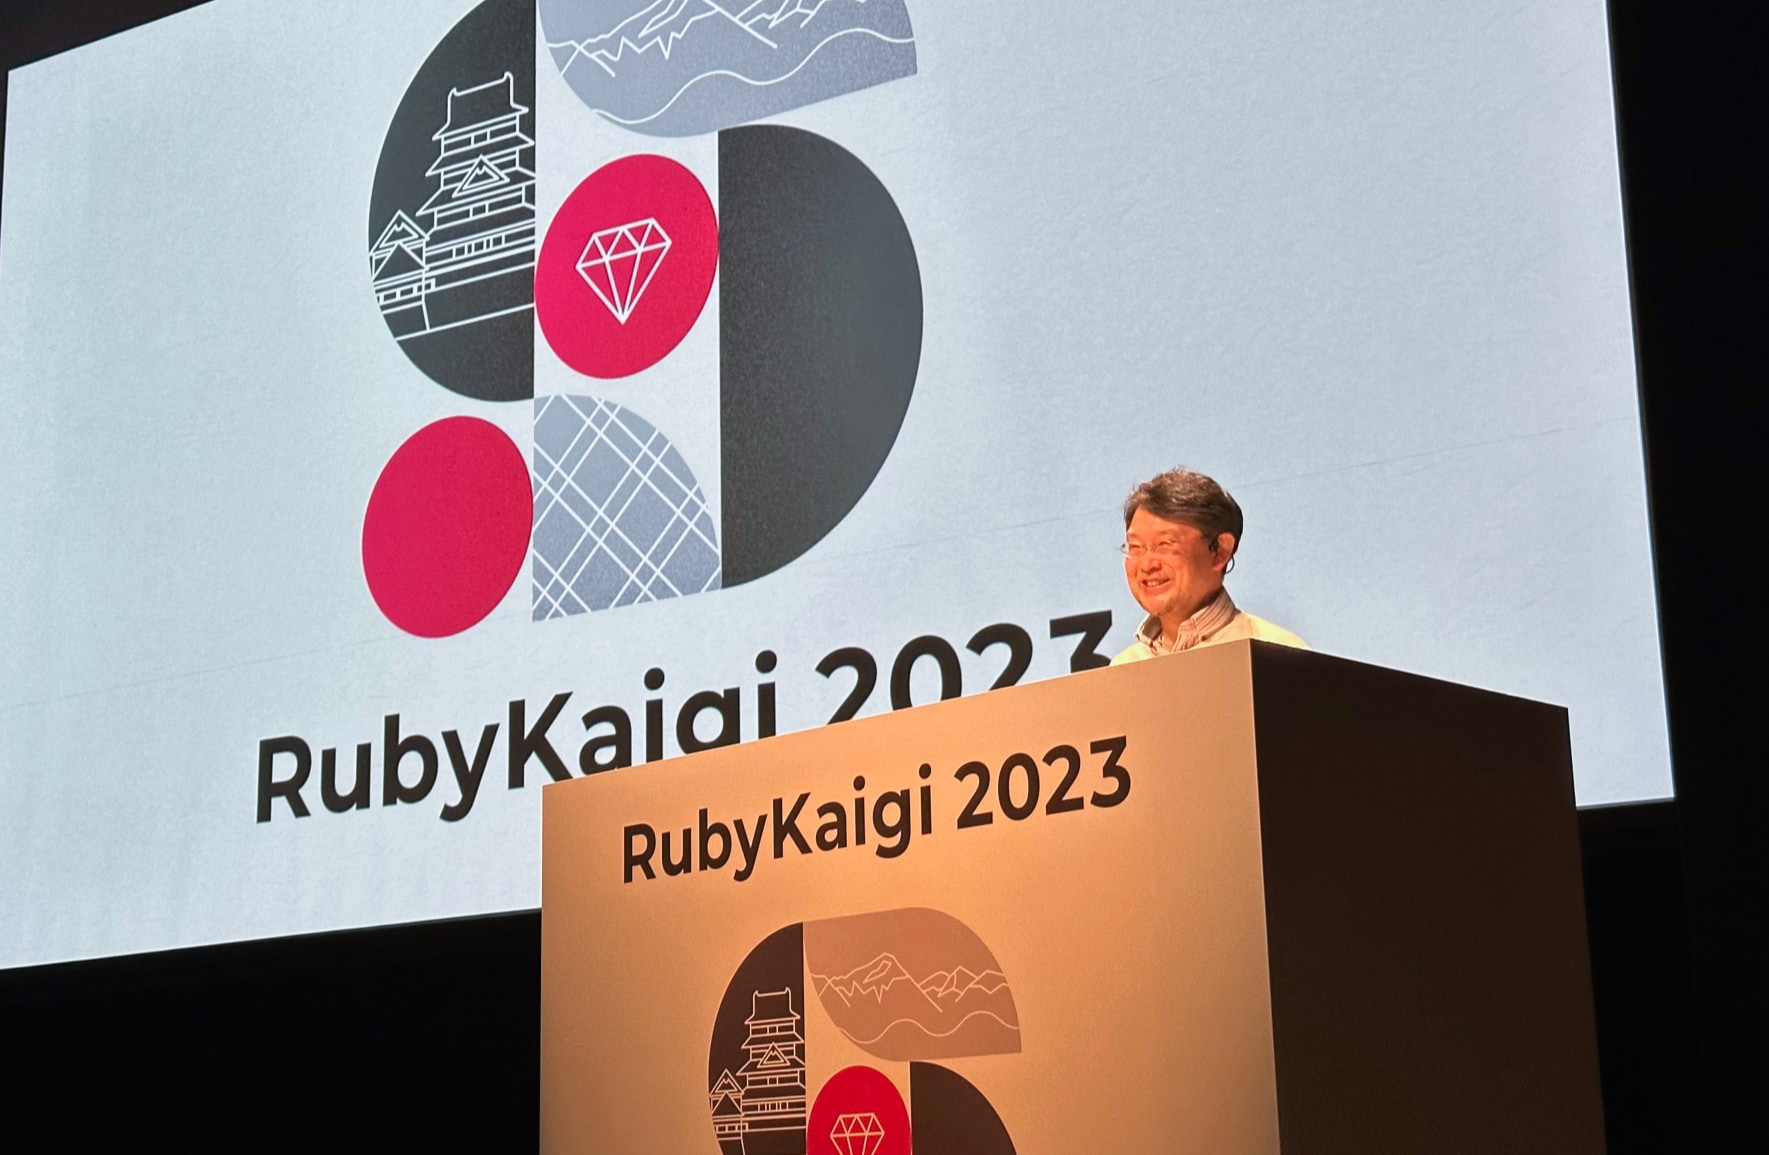 Matz on stage at RubyKaigi 2023